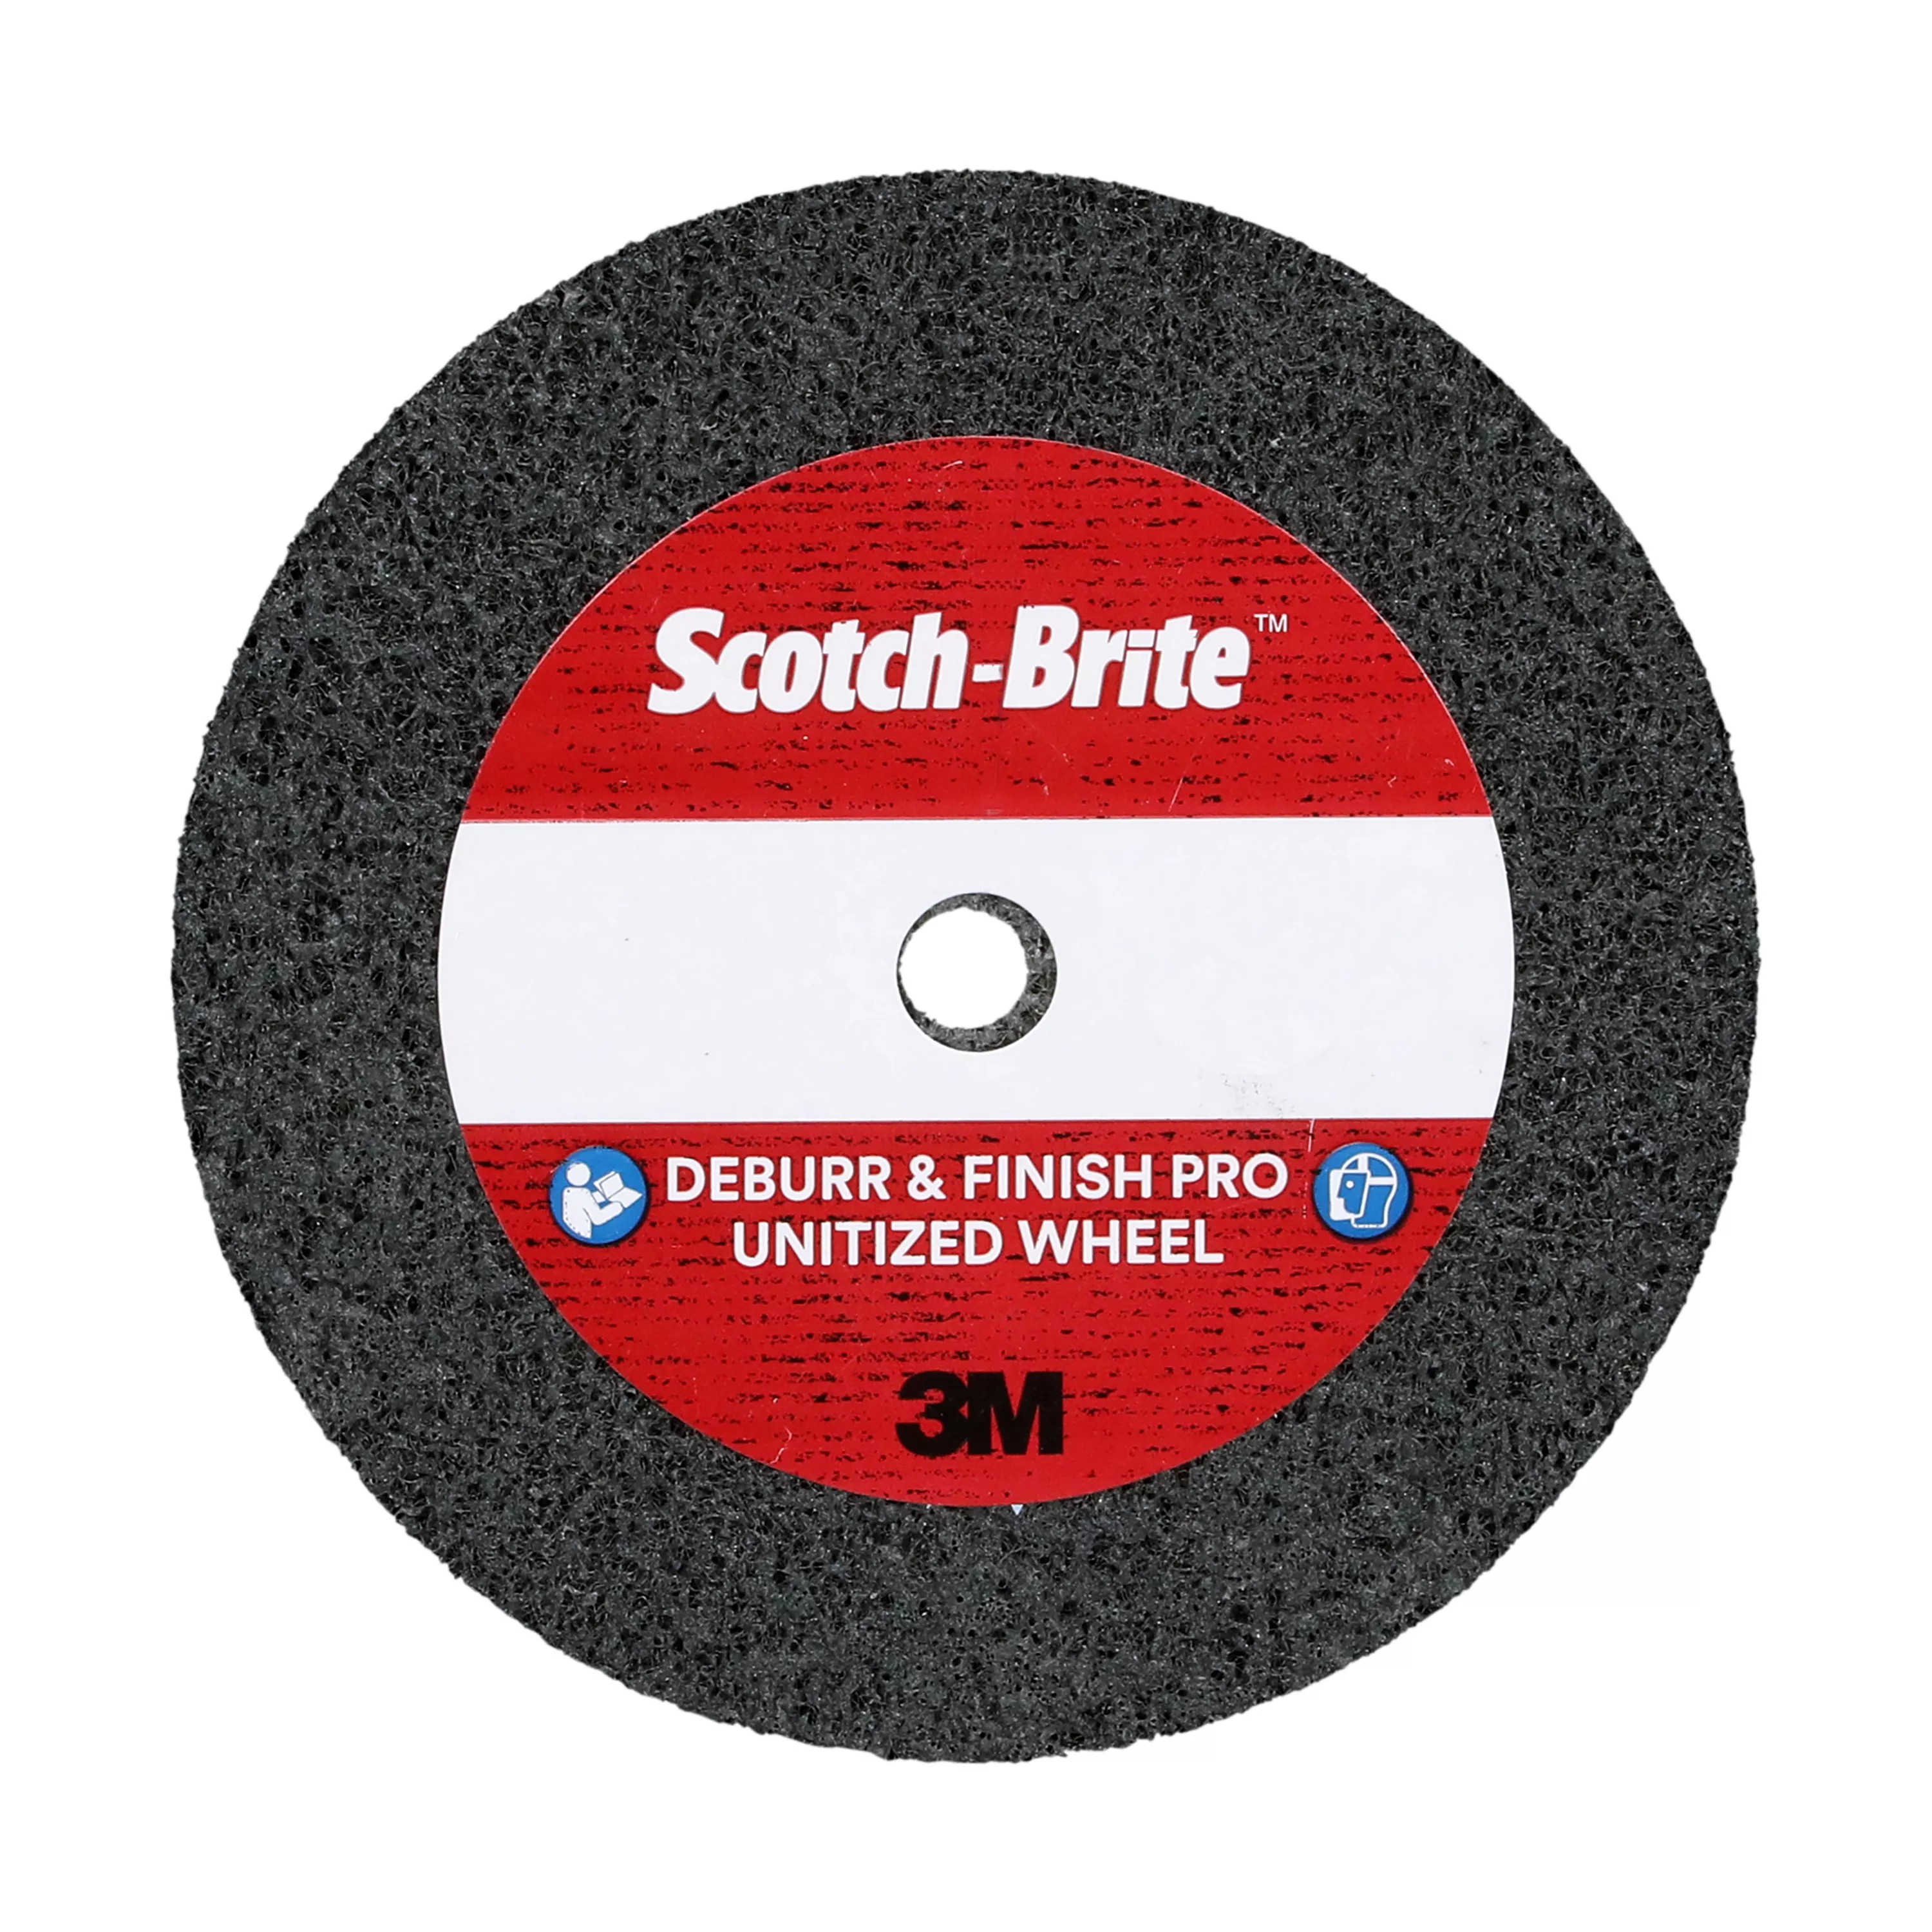 SKU 7100143403 | Scotch-Brite™ Deburr & Finish Pro Unitized Wheel